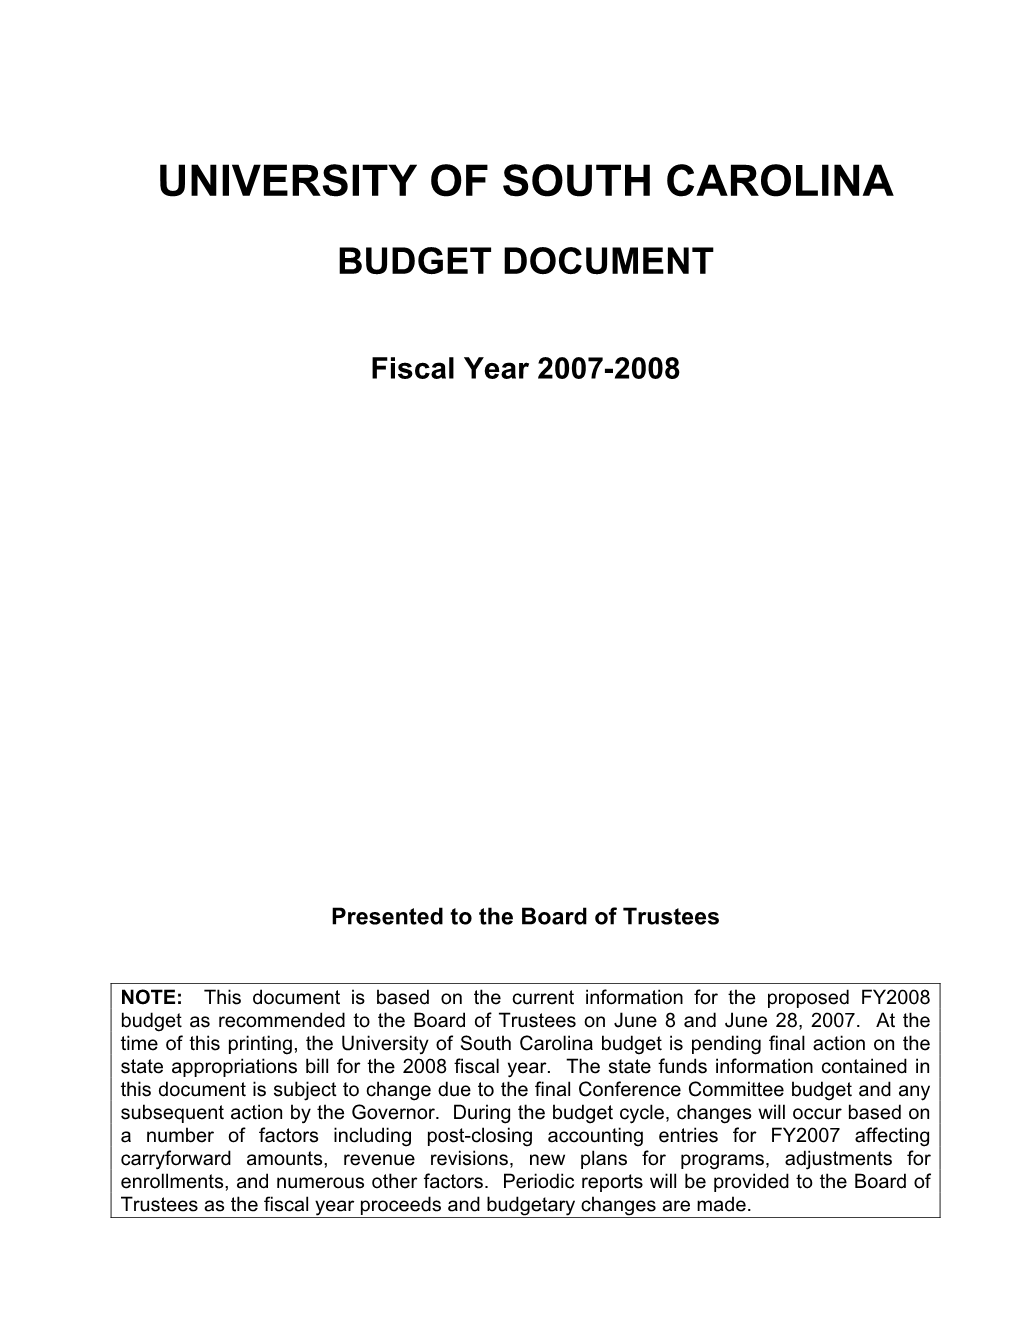 FY 2007-08 Budget Document